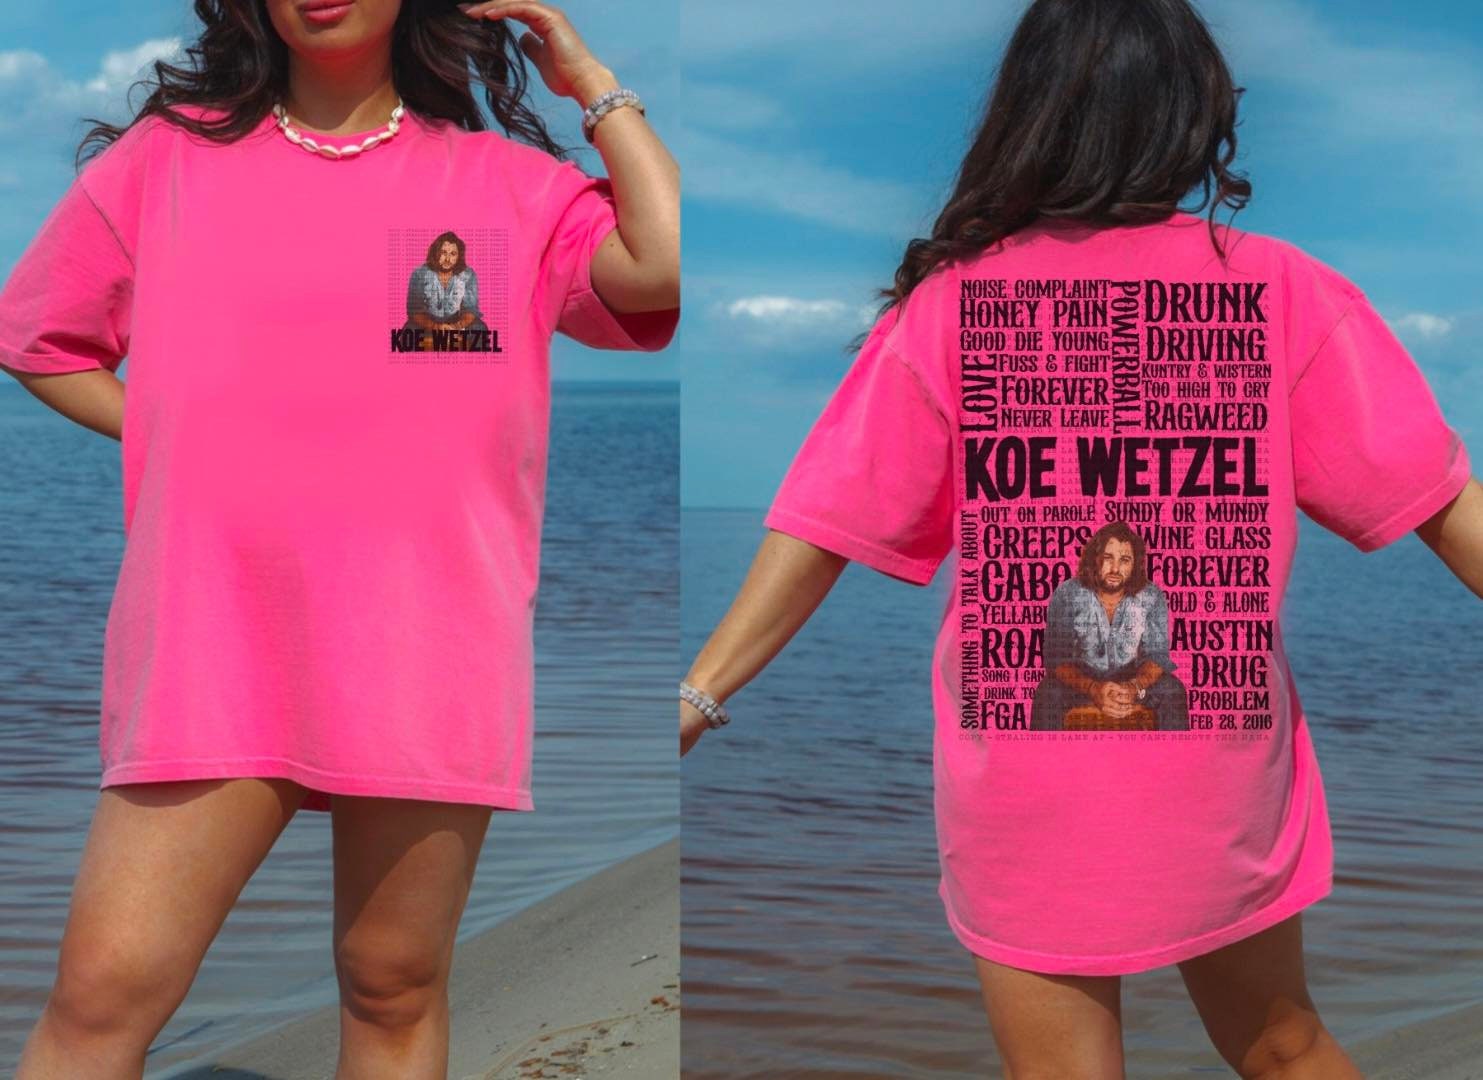 Koe Wetzel Country Music Song Title Tshirt, Cotton Short Sleeve Tee, Summer Casual Shirt